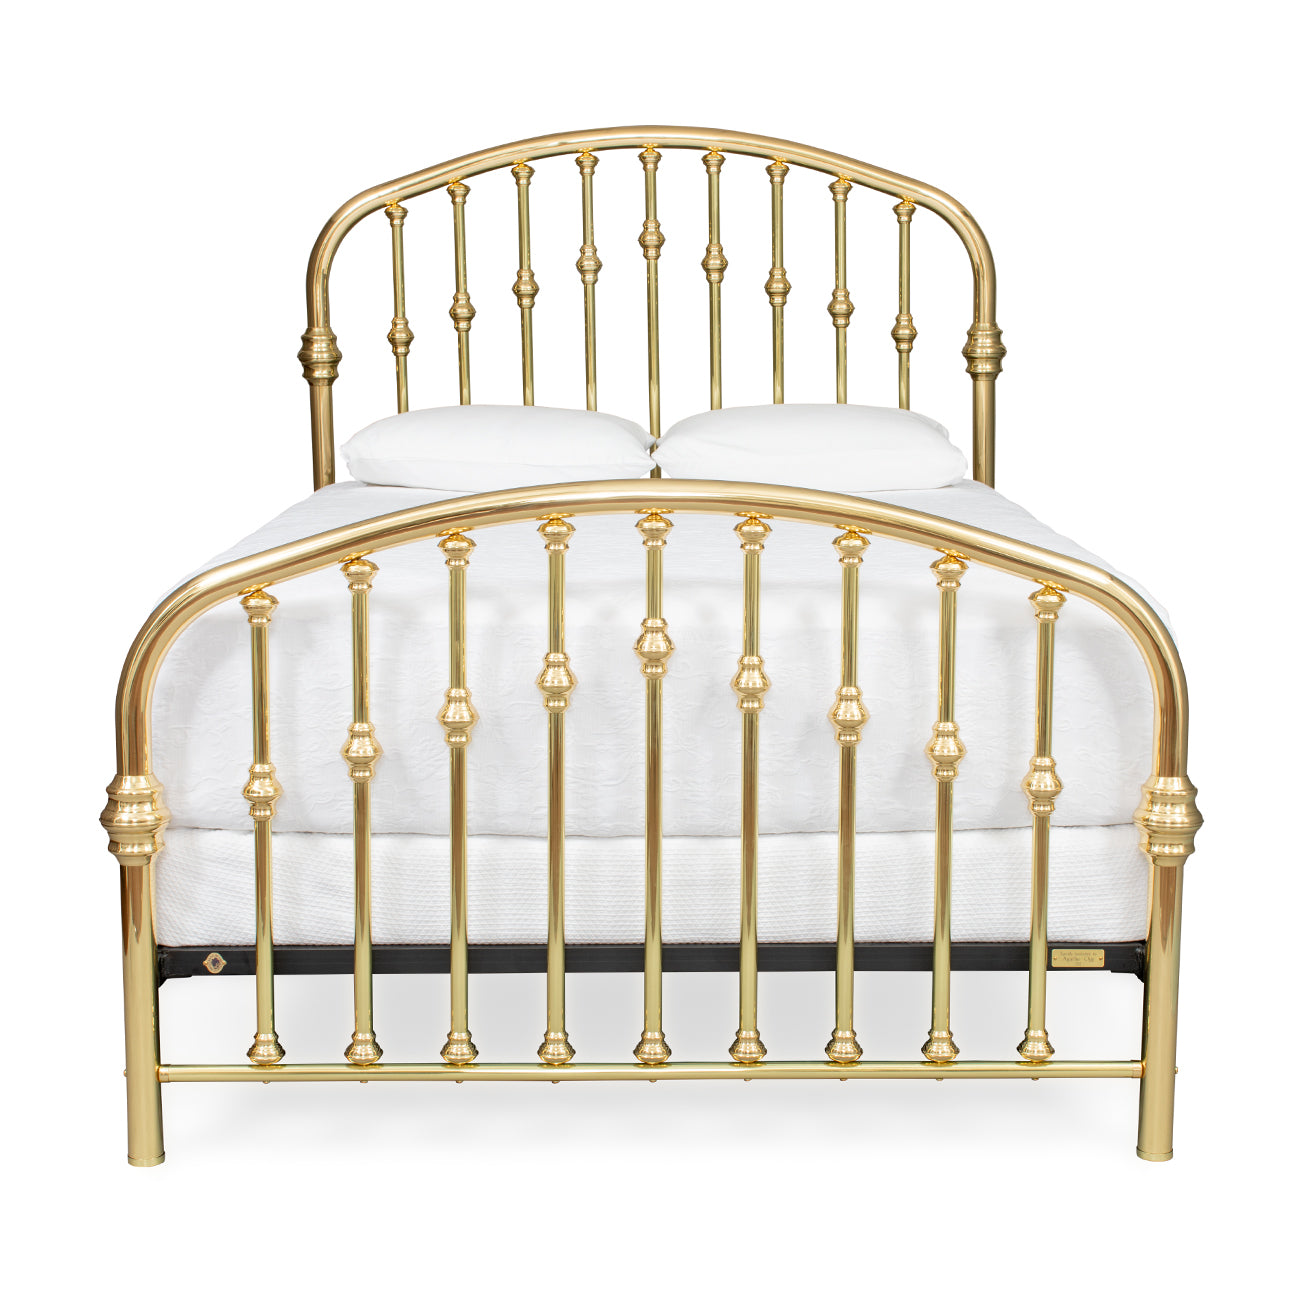 Halcyon Brass Bed - Worthen Custom Iron & Brass Furniture